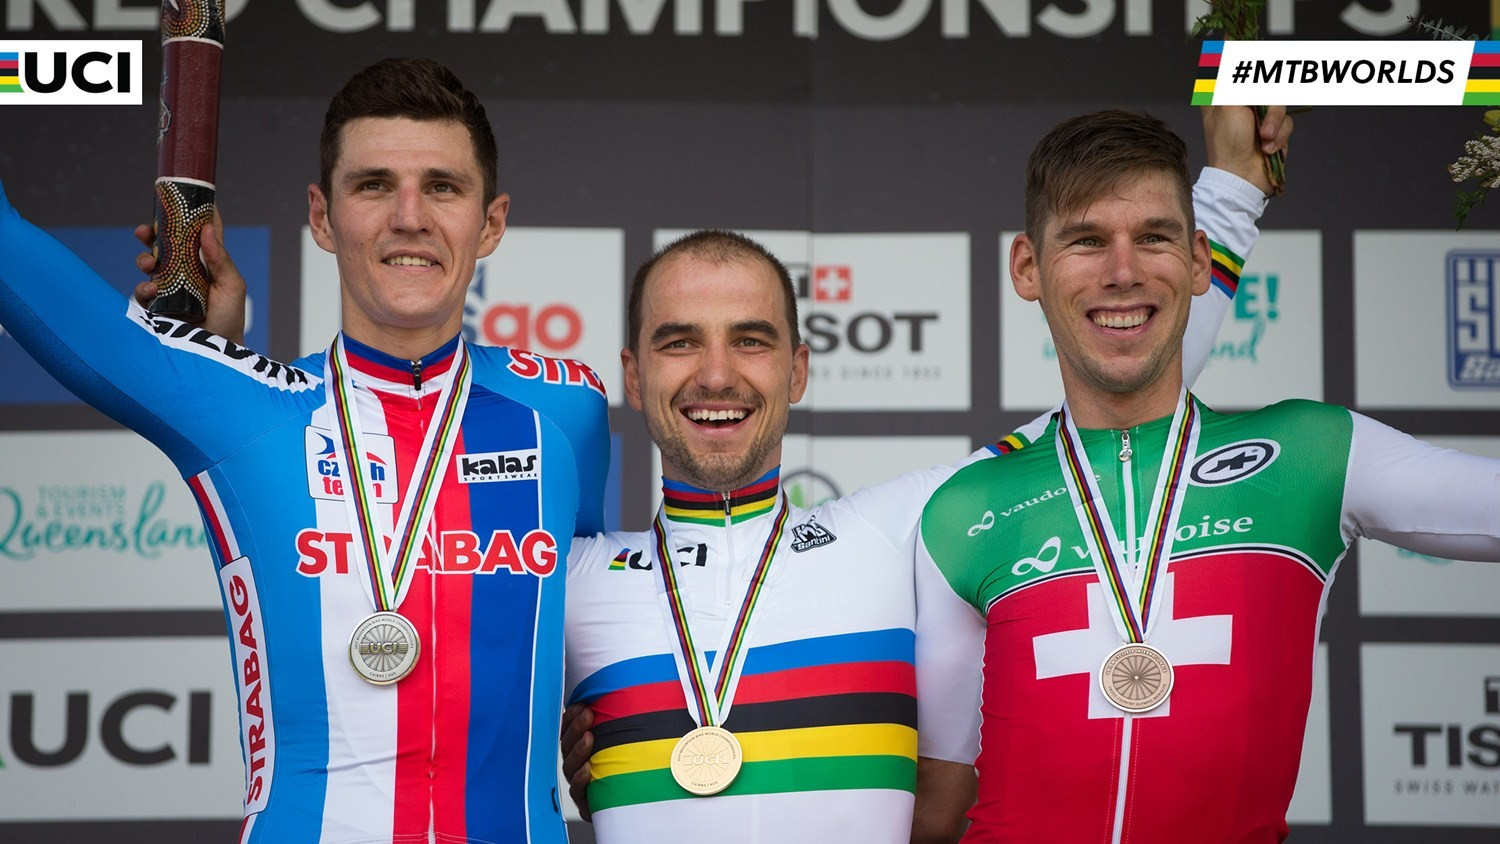 Schurter leads Swiss success at UCI Mountain Bike World Championships